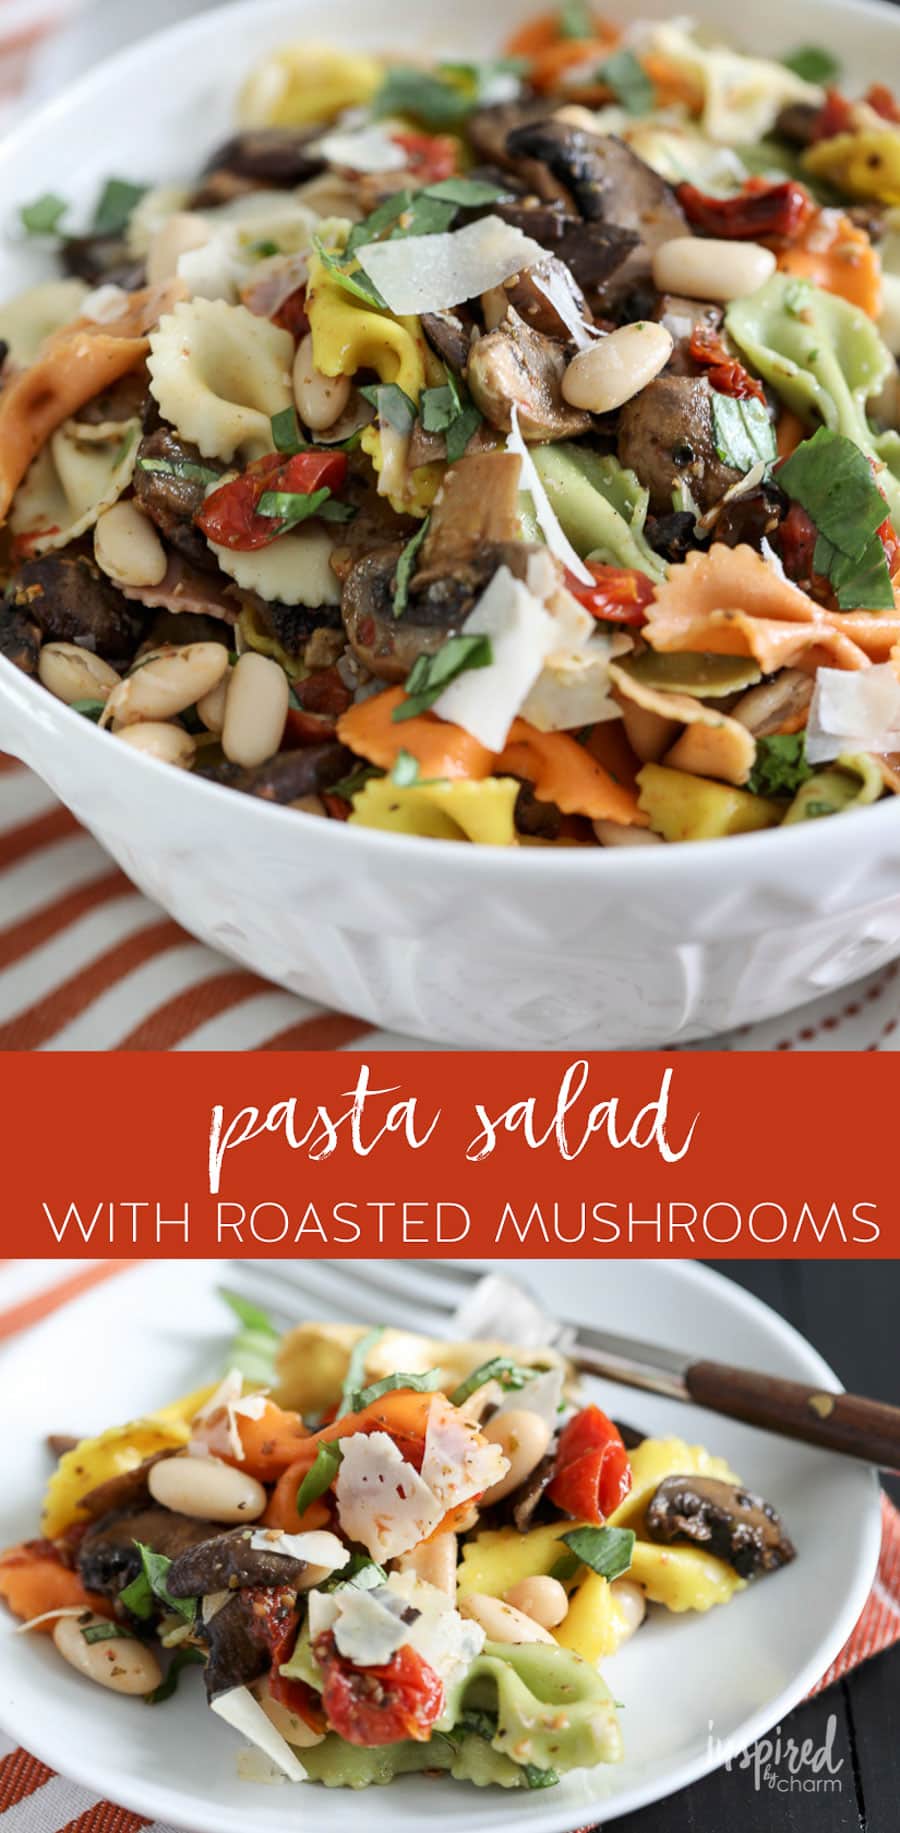 Really Good Pasta Salad with Roasted Mushrooms #recipe #pastasalad #mushrooms #appetizer #sidedish #pasta